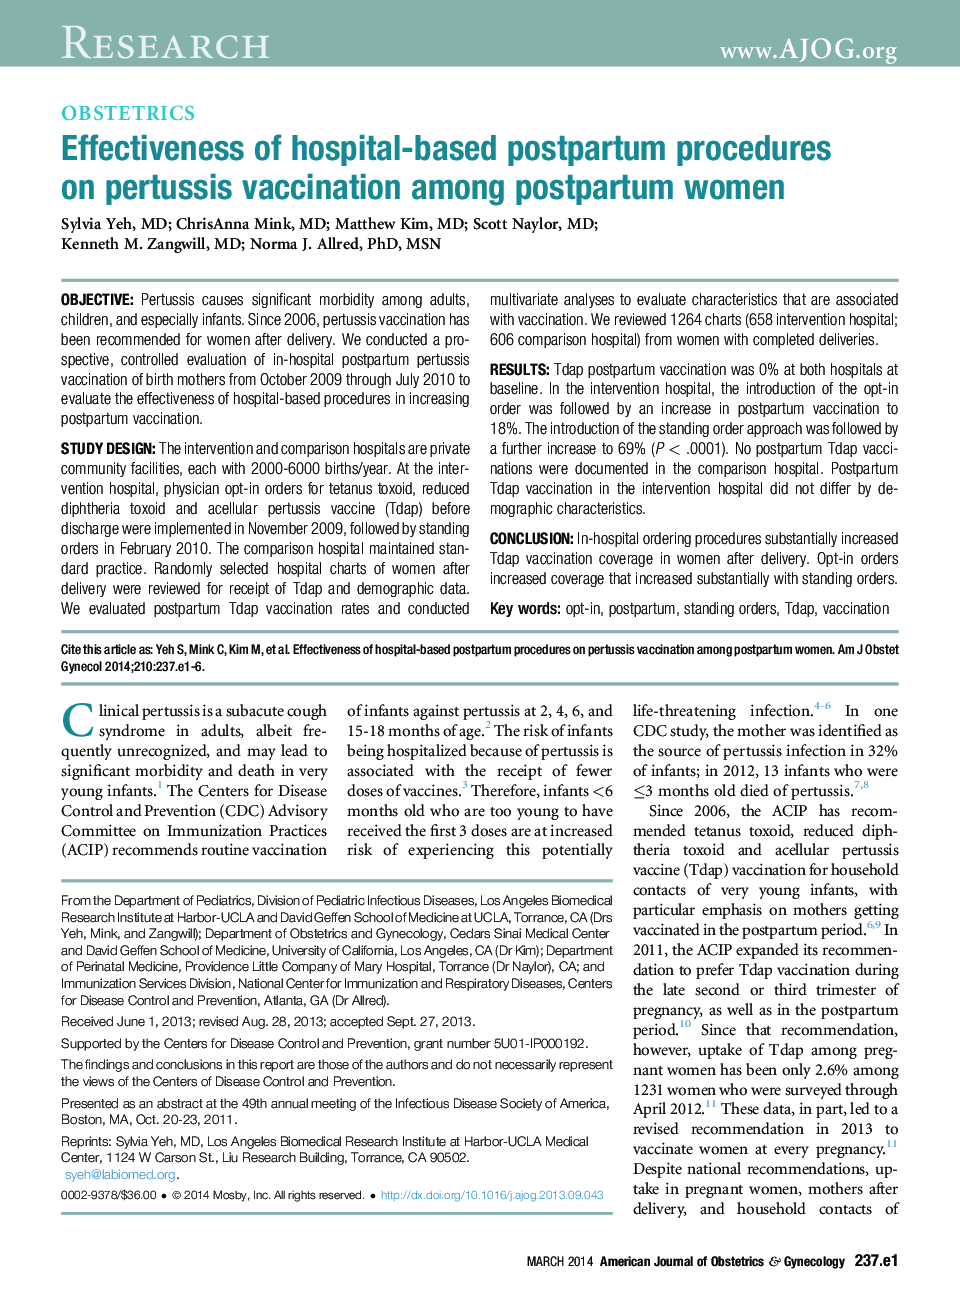 Effectiveness of hospital-based postpartum procedures on pertussis vaccination among postpartum women